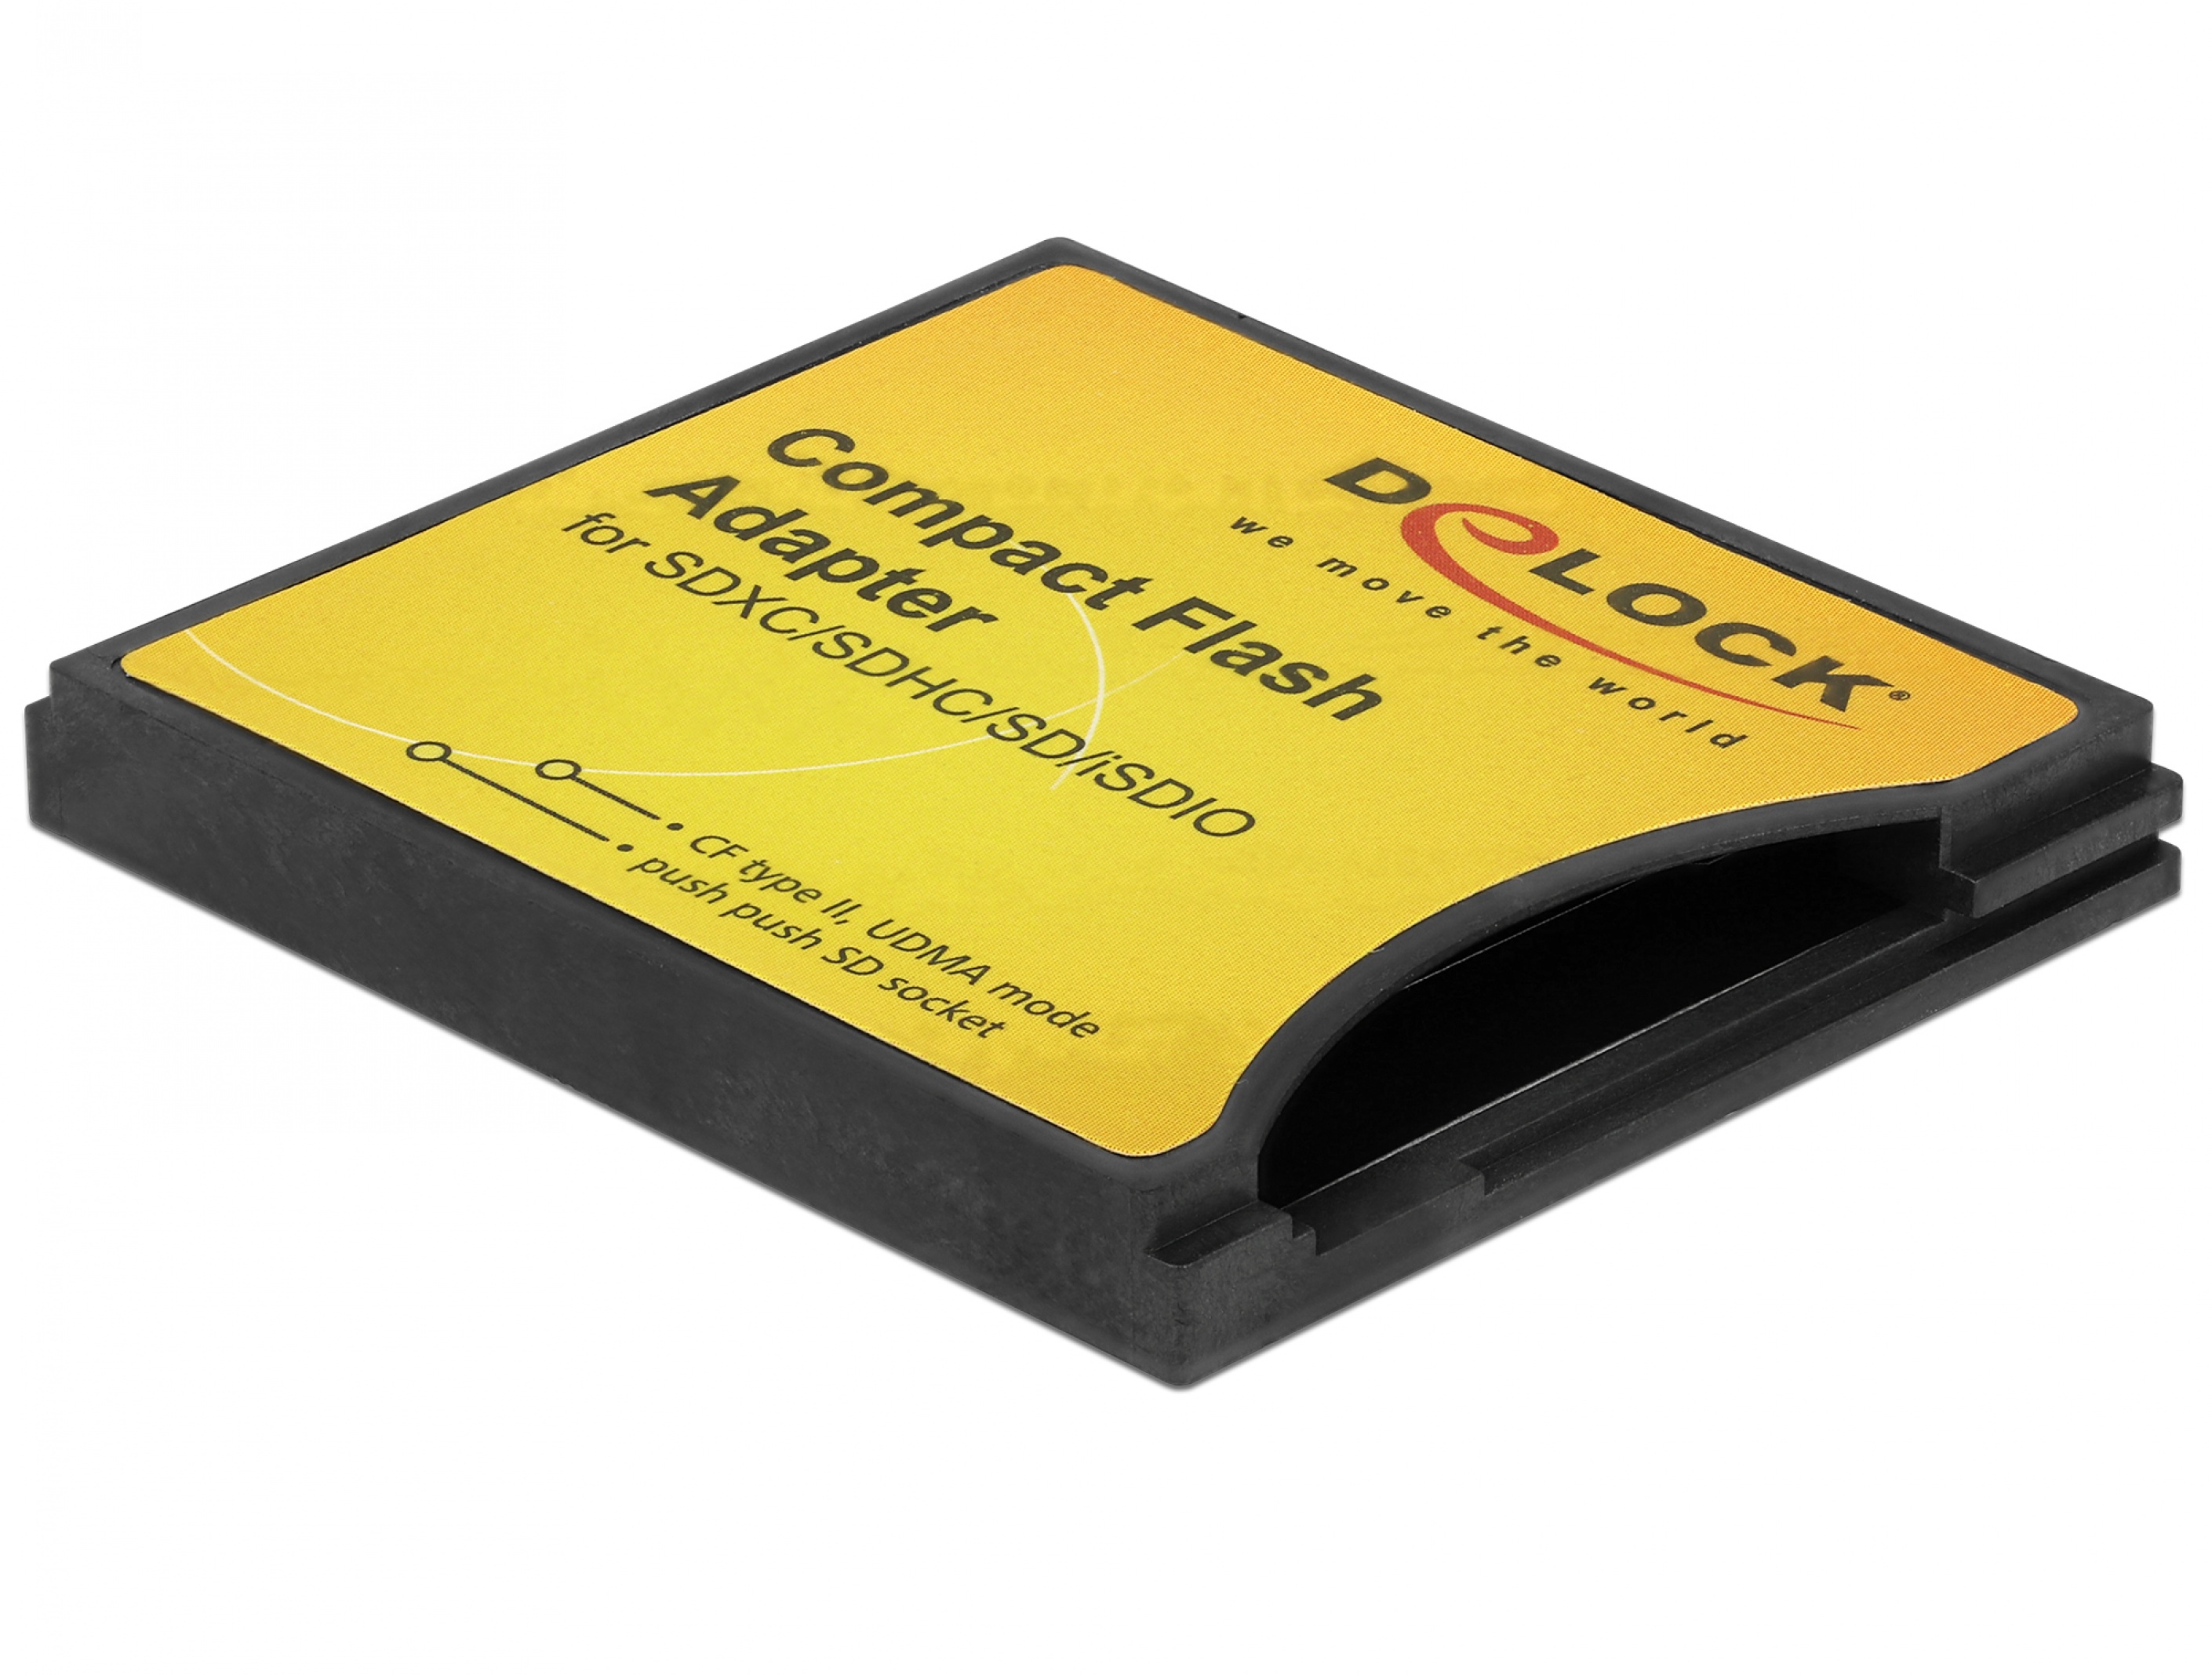 Compact Flash адаптер. CF-CF адаптер. Переходник Compact Flash на SD. Delock PCMCIA Card Reader for Compact Flash Memory Cards. Cf flash